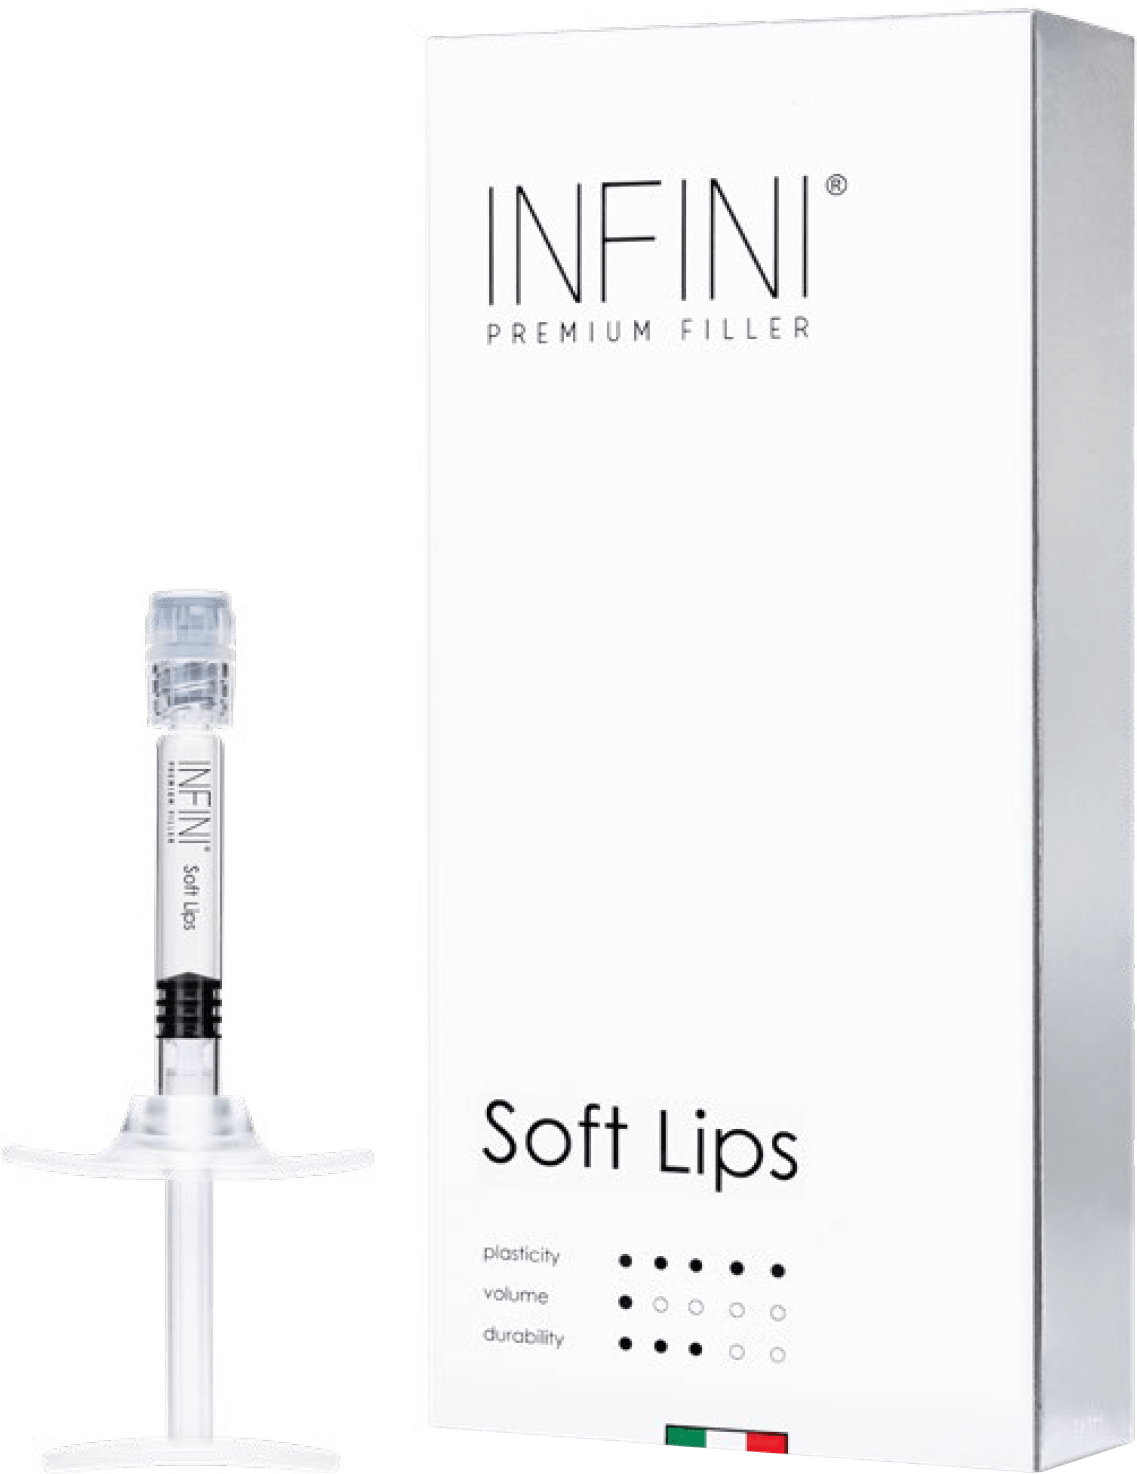 Infini Premium Filler Soft Lips